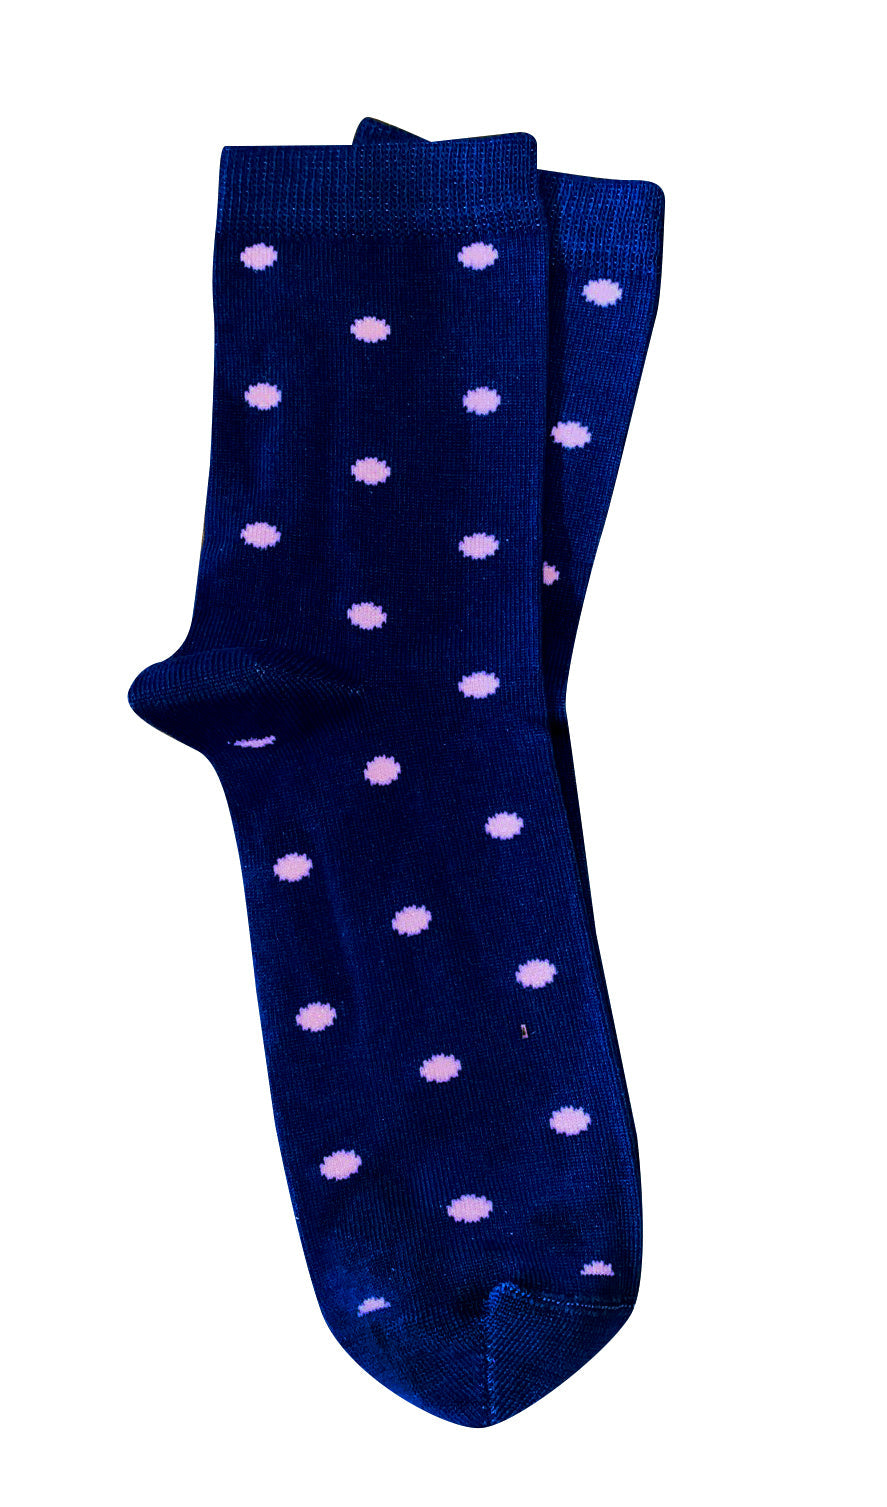 ‘Dotty’ Cotton Socks - Tightology socks Tightology Navy & Pink Dots Short 